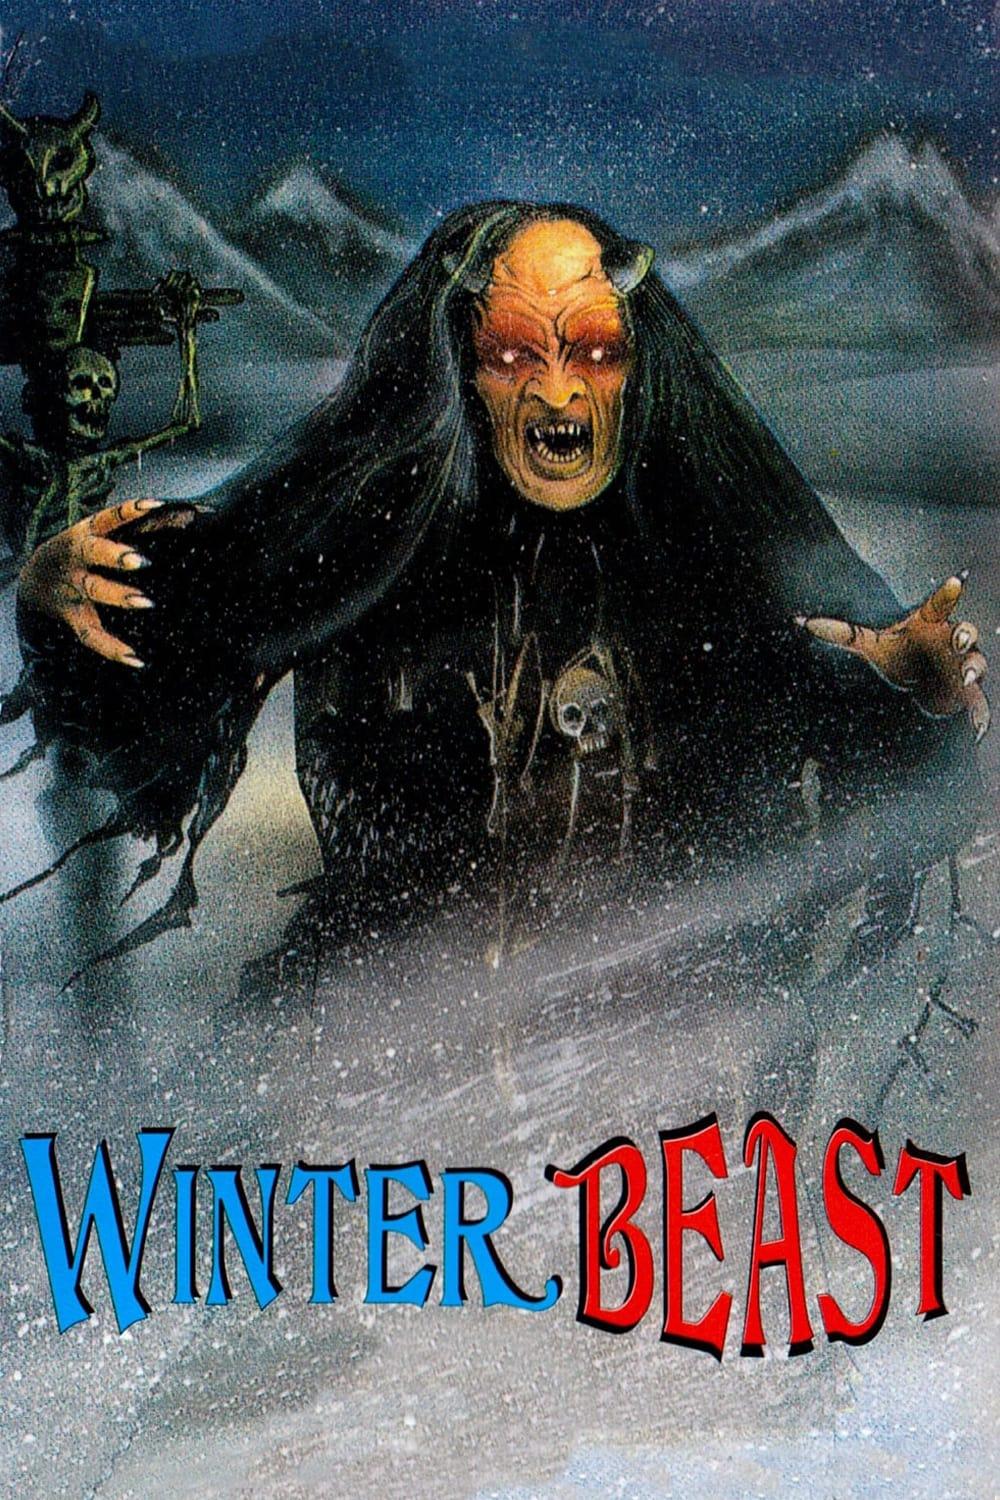 Winterbeast poster